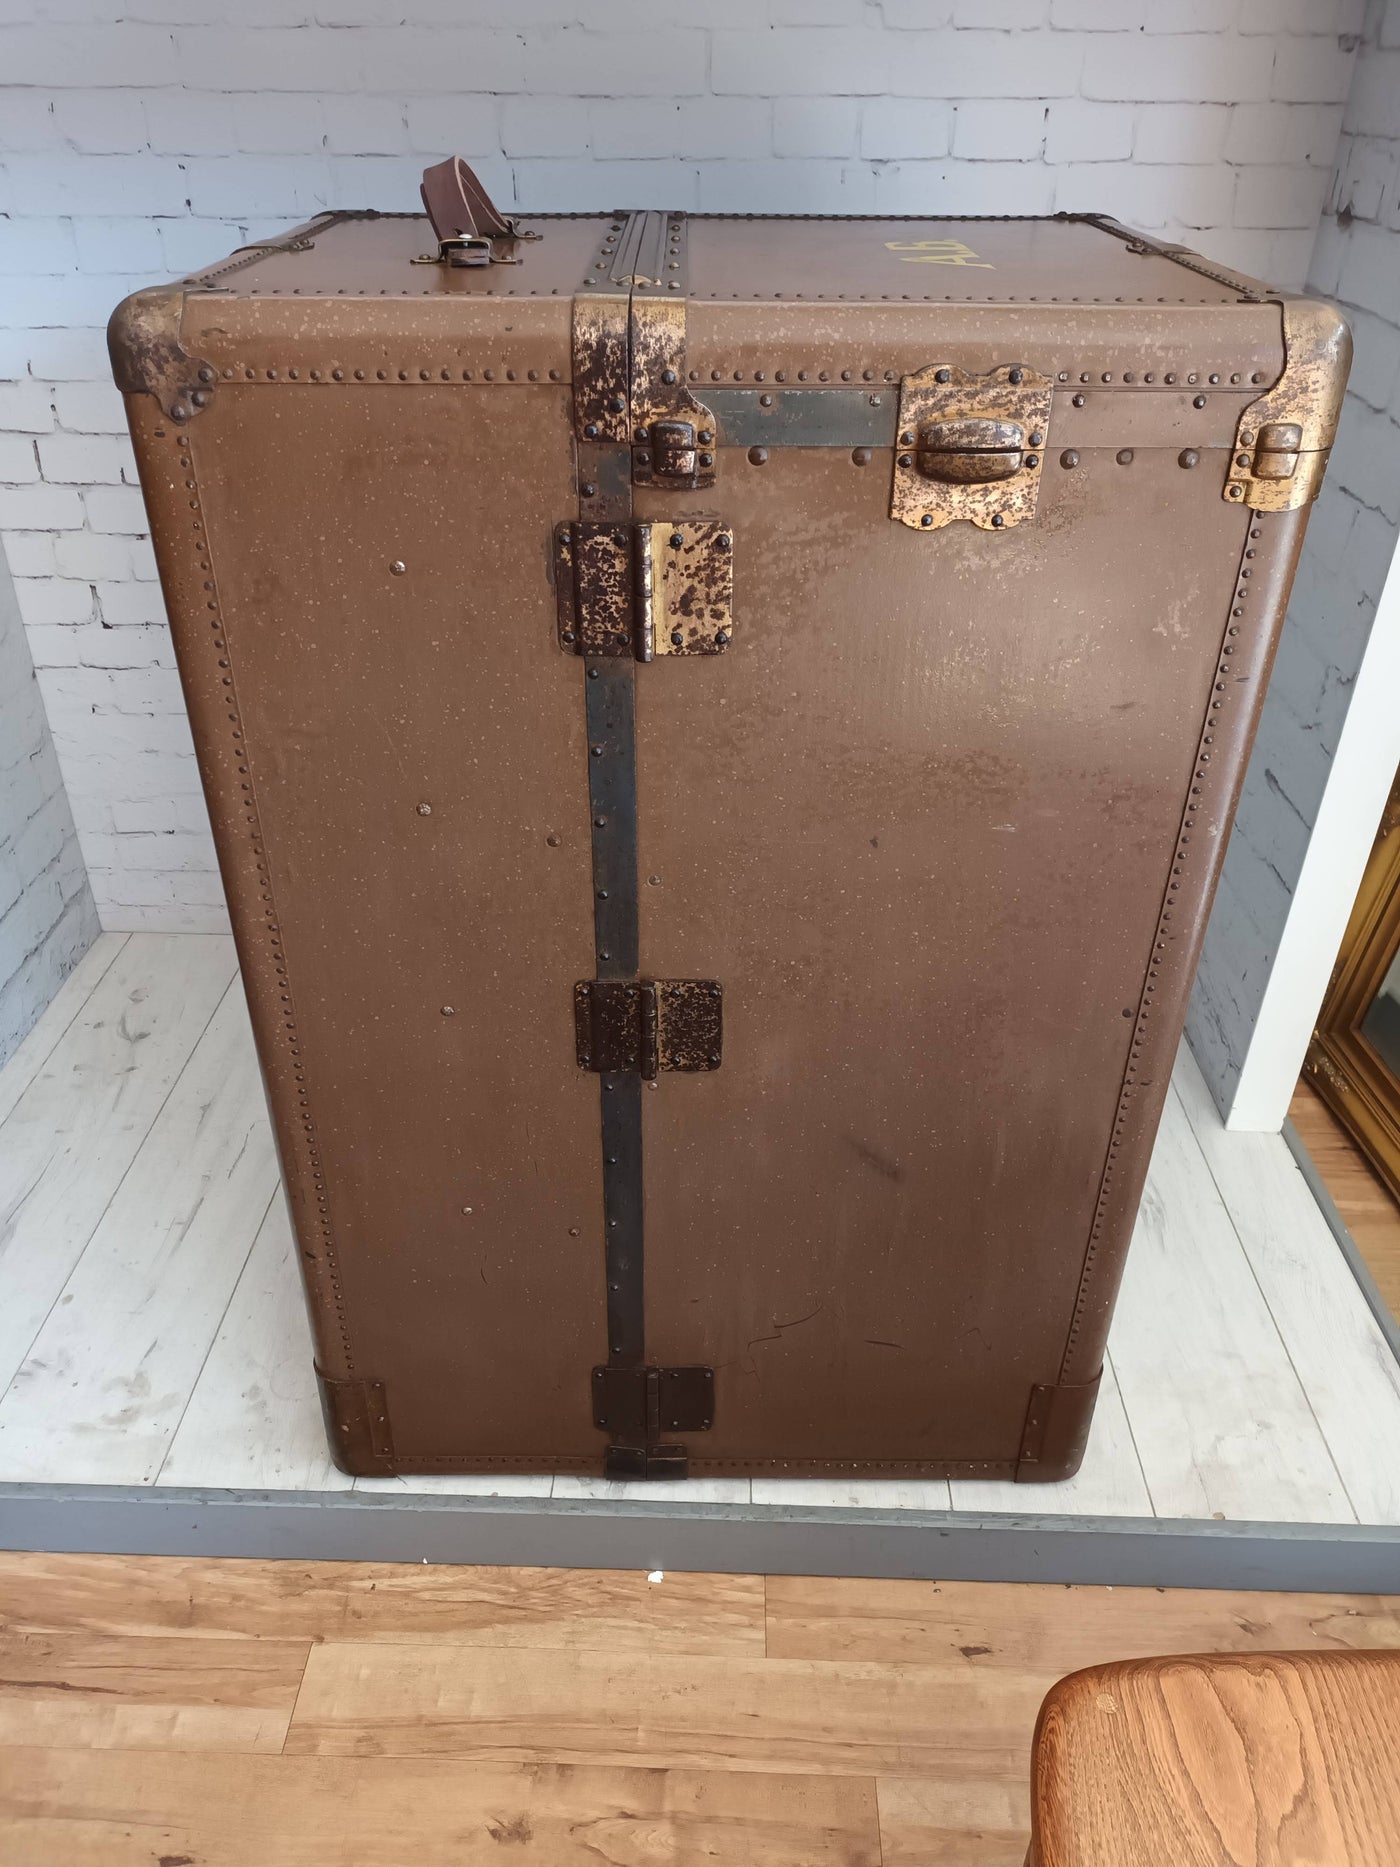 Antique Steamer Travel Wardrobe Trunk Chest Suitcase Armoire